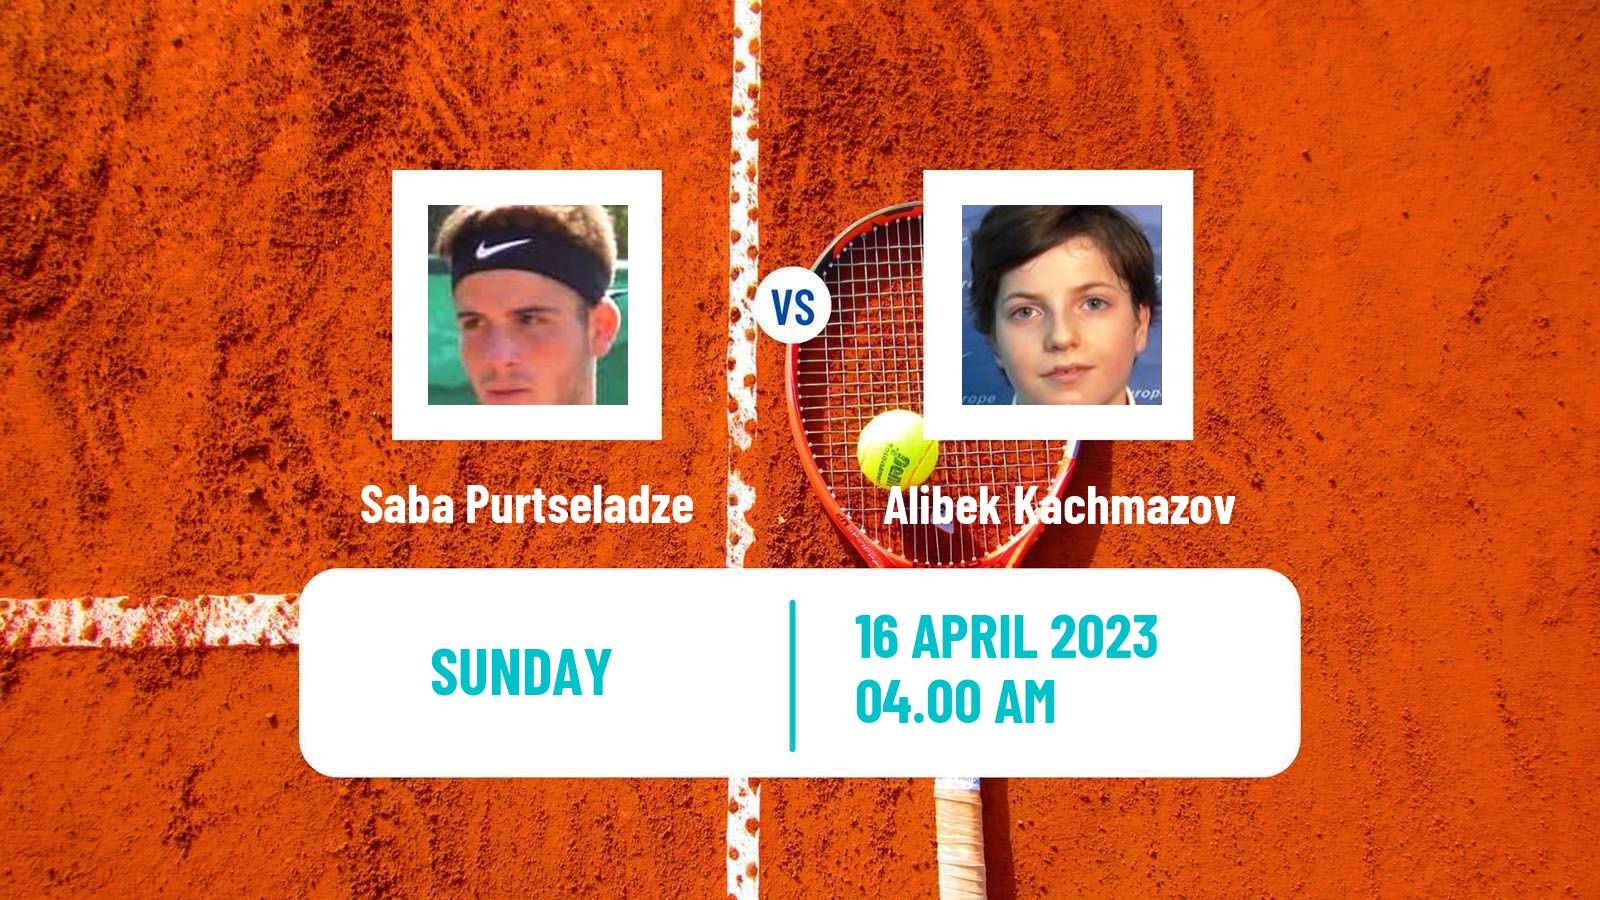 Tennis ITF Tournaments Saba Purtseladze - Alibek Kachmazov